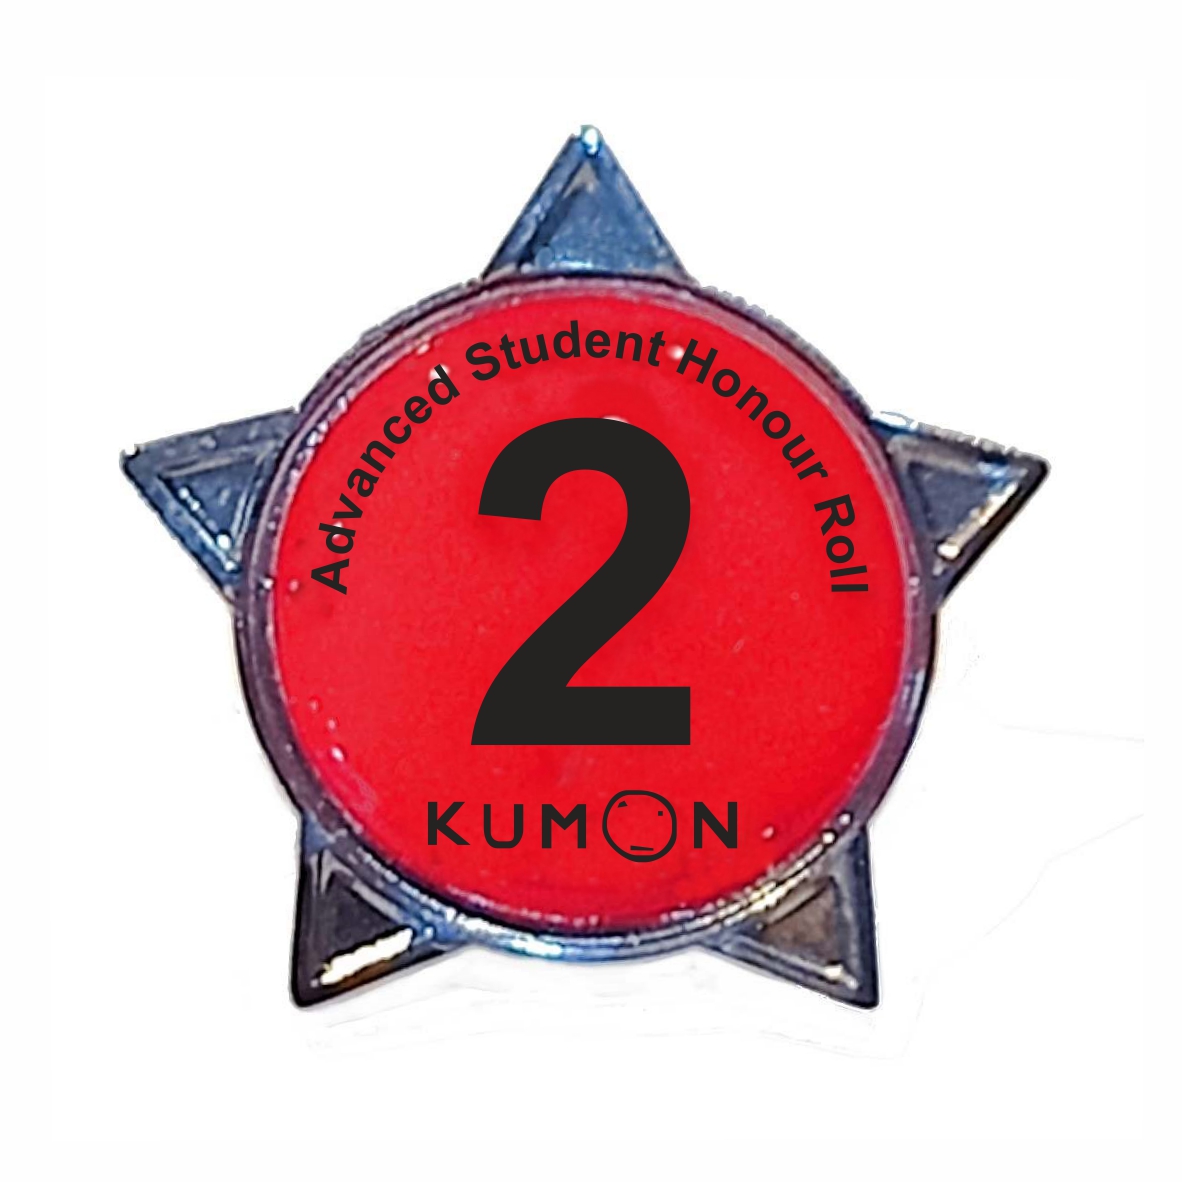 KUMON Advanced Student 2 red